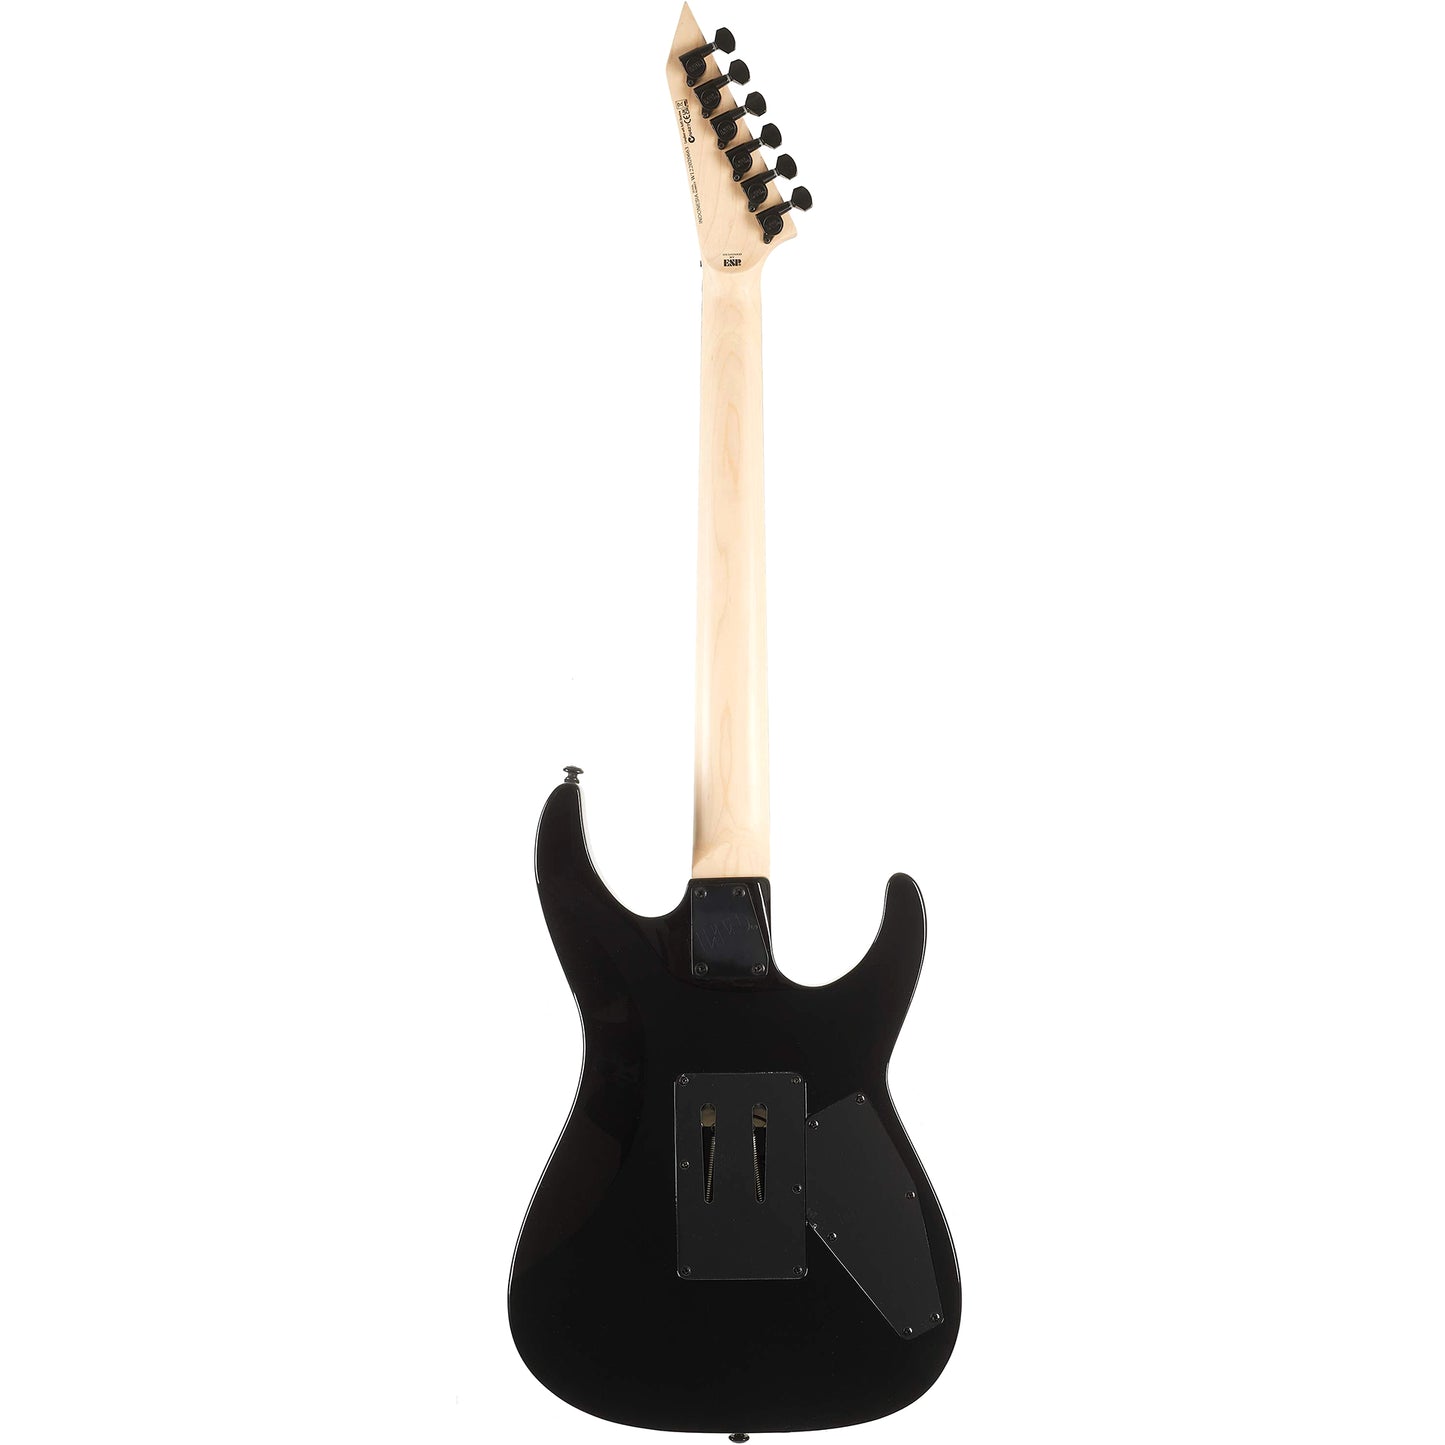 ESP LTD KH-202 Left Handed Kirk Hammet Signature Electric Guitar, Black